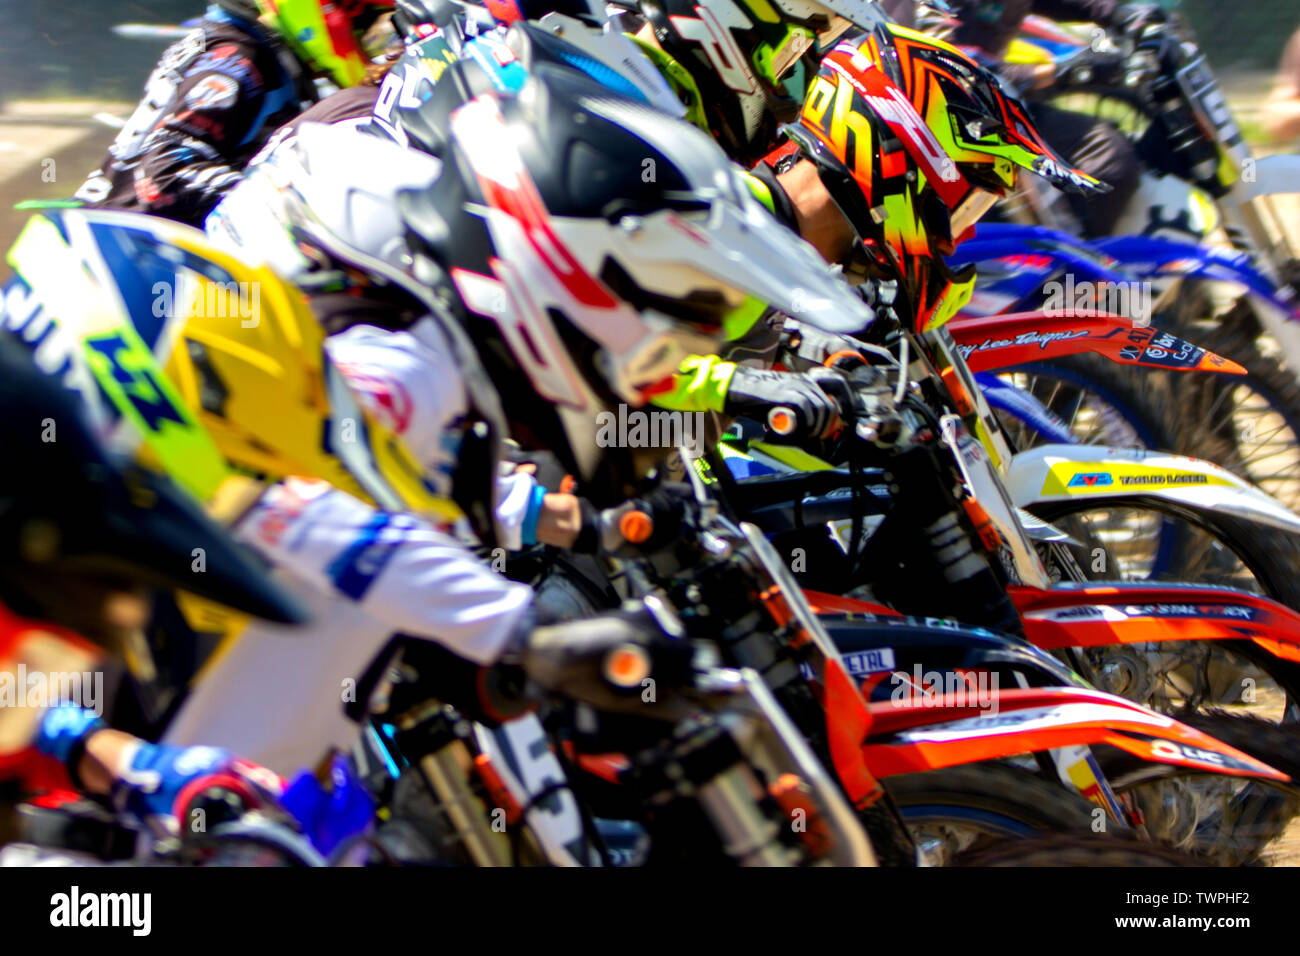 FMI championships motocross race Stock Photo